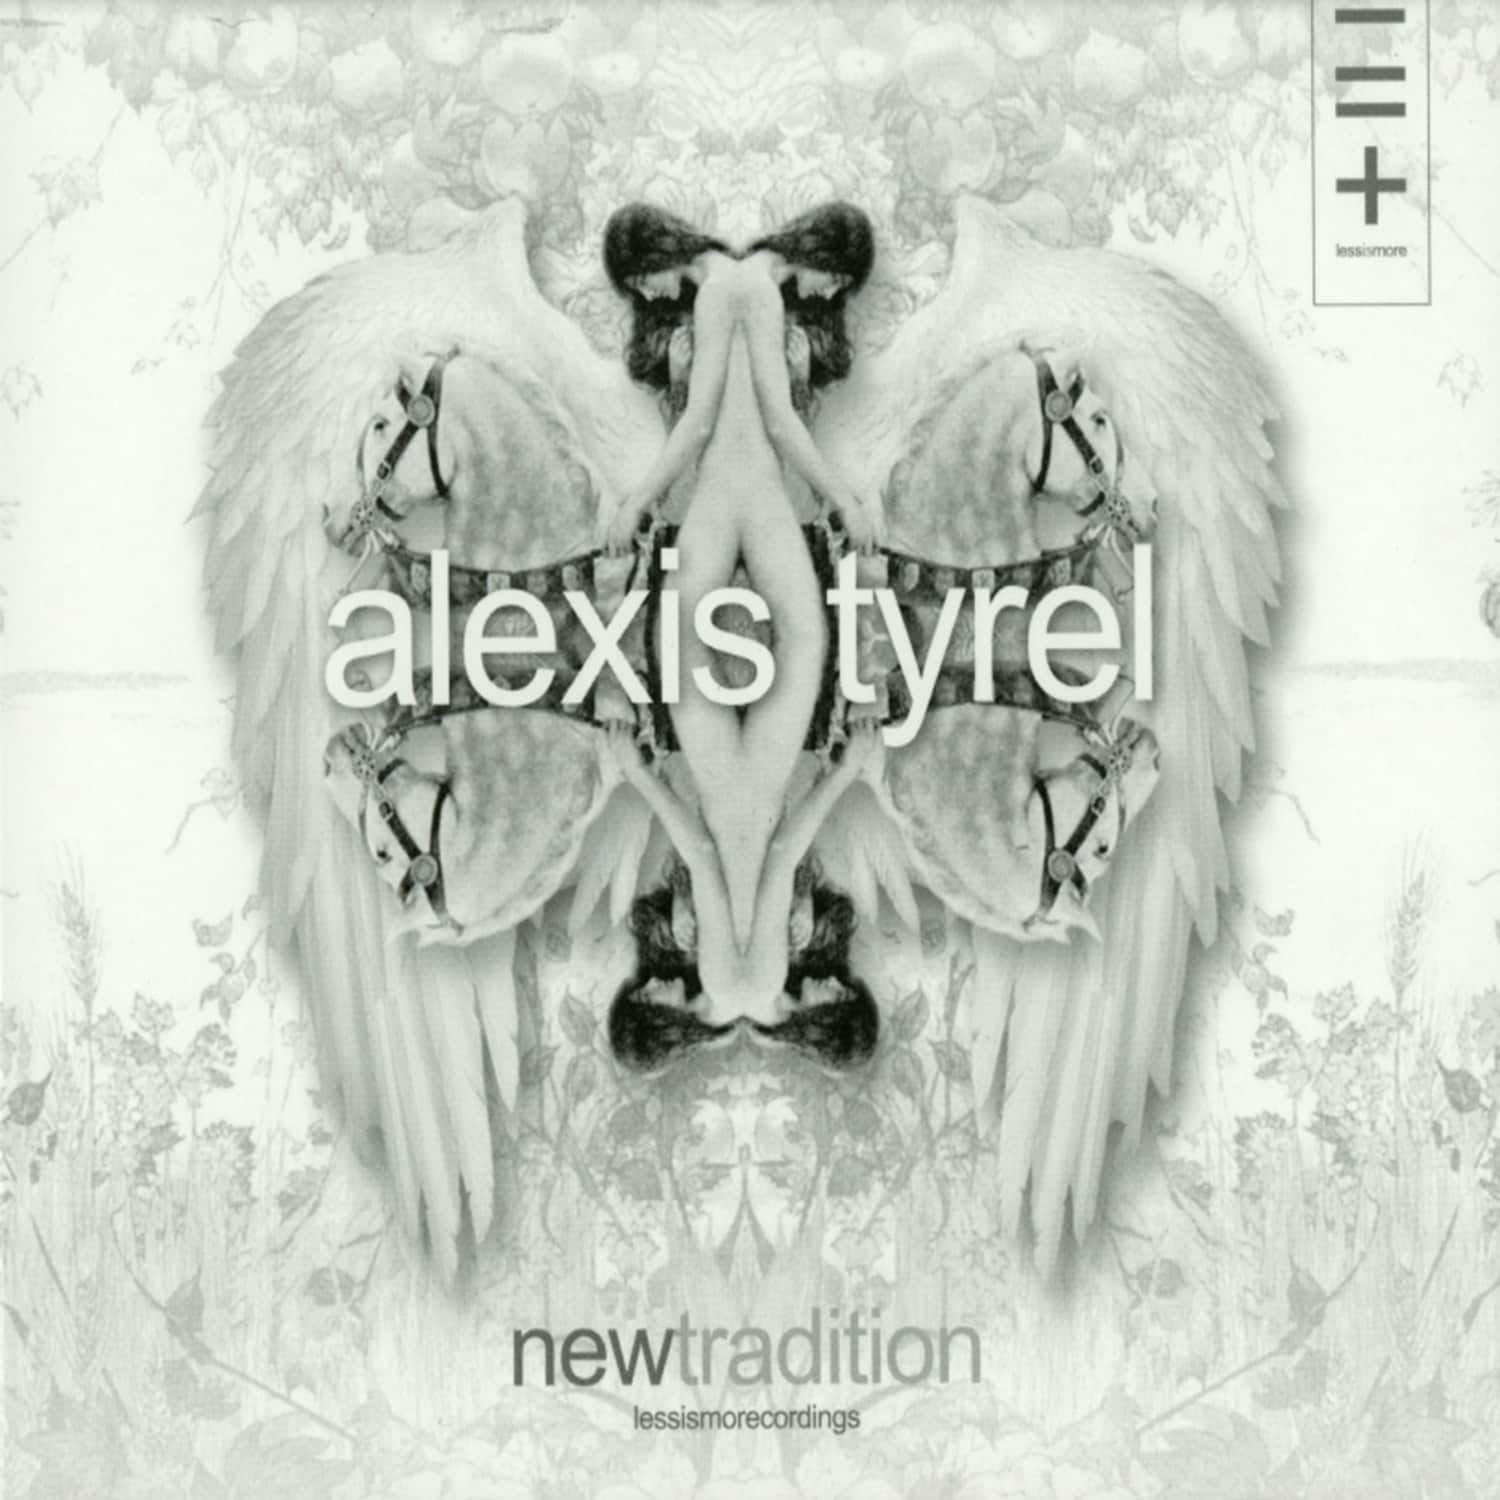 Alexis Tyrel - NEW TRADITION 